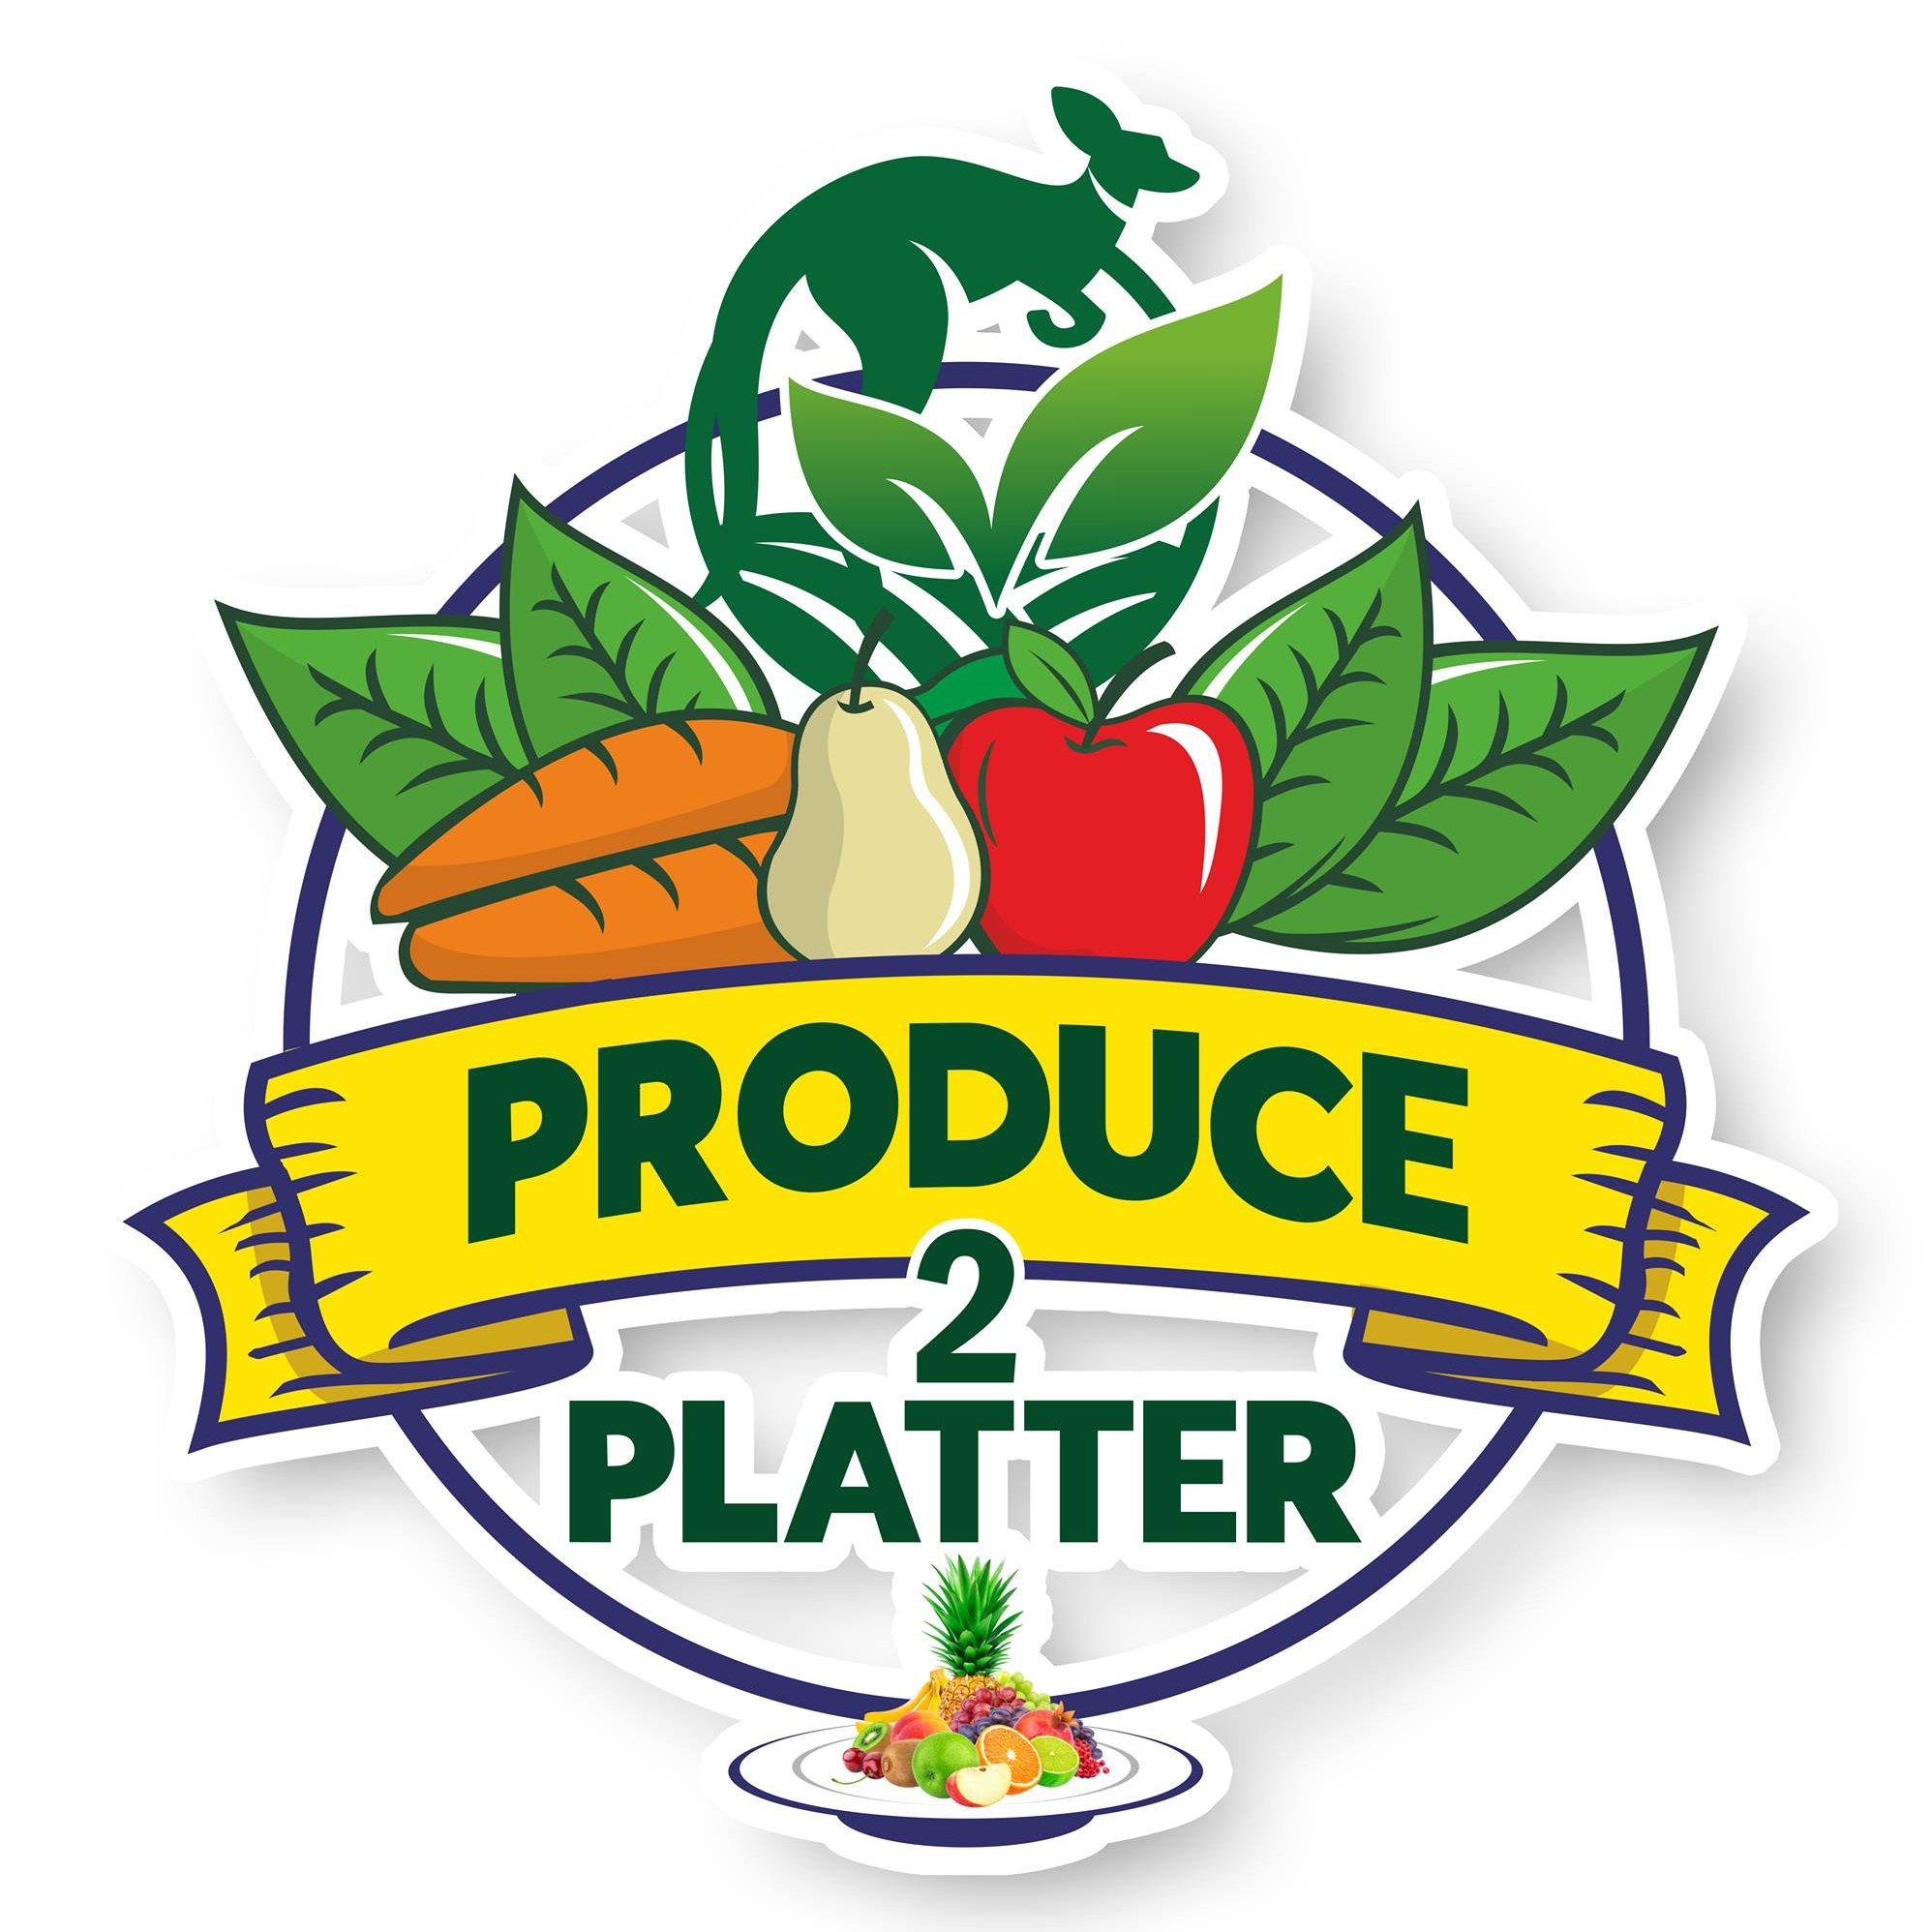 Produce 2 Platter